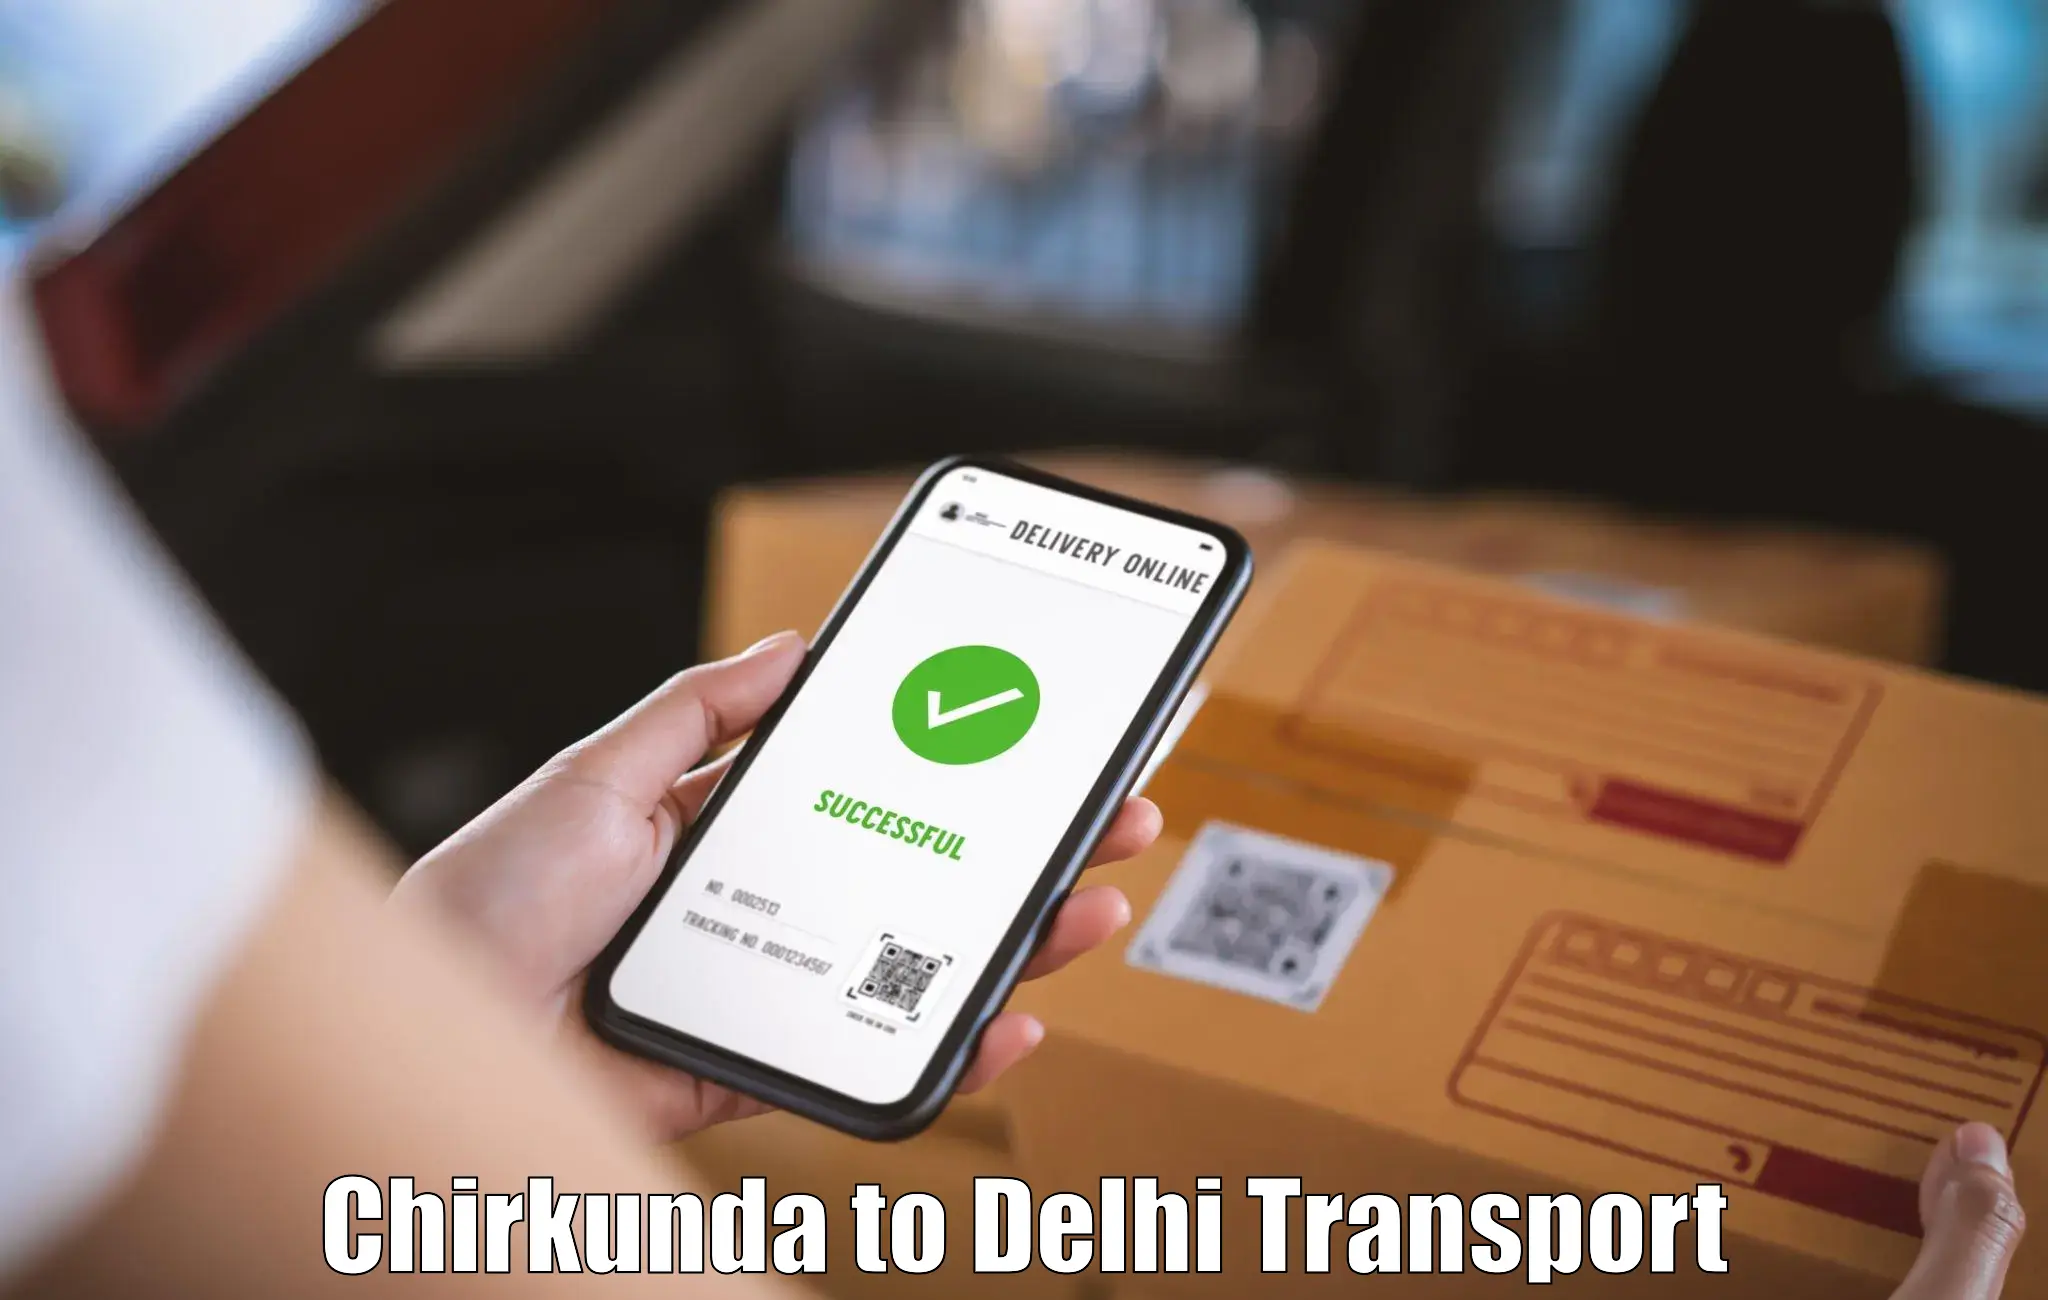 Container transport service Chirkunda to Ashok Vihar